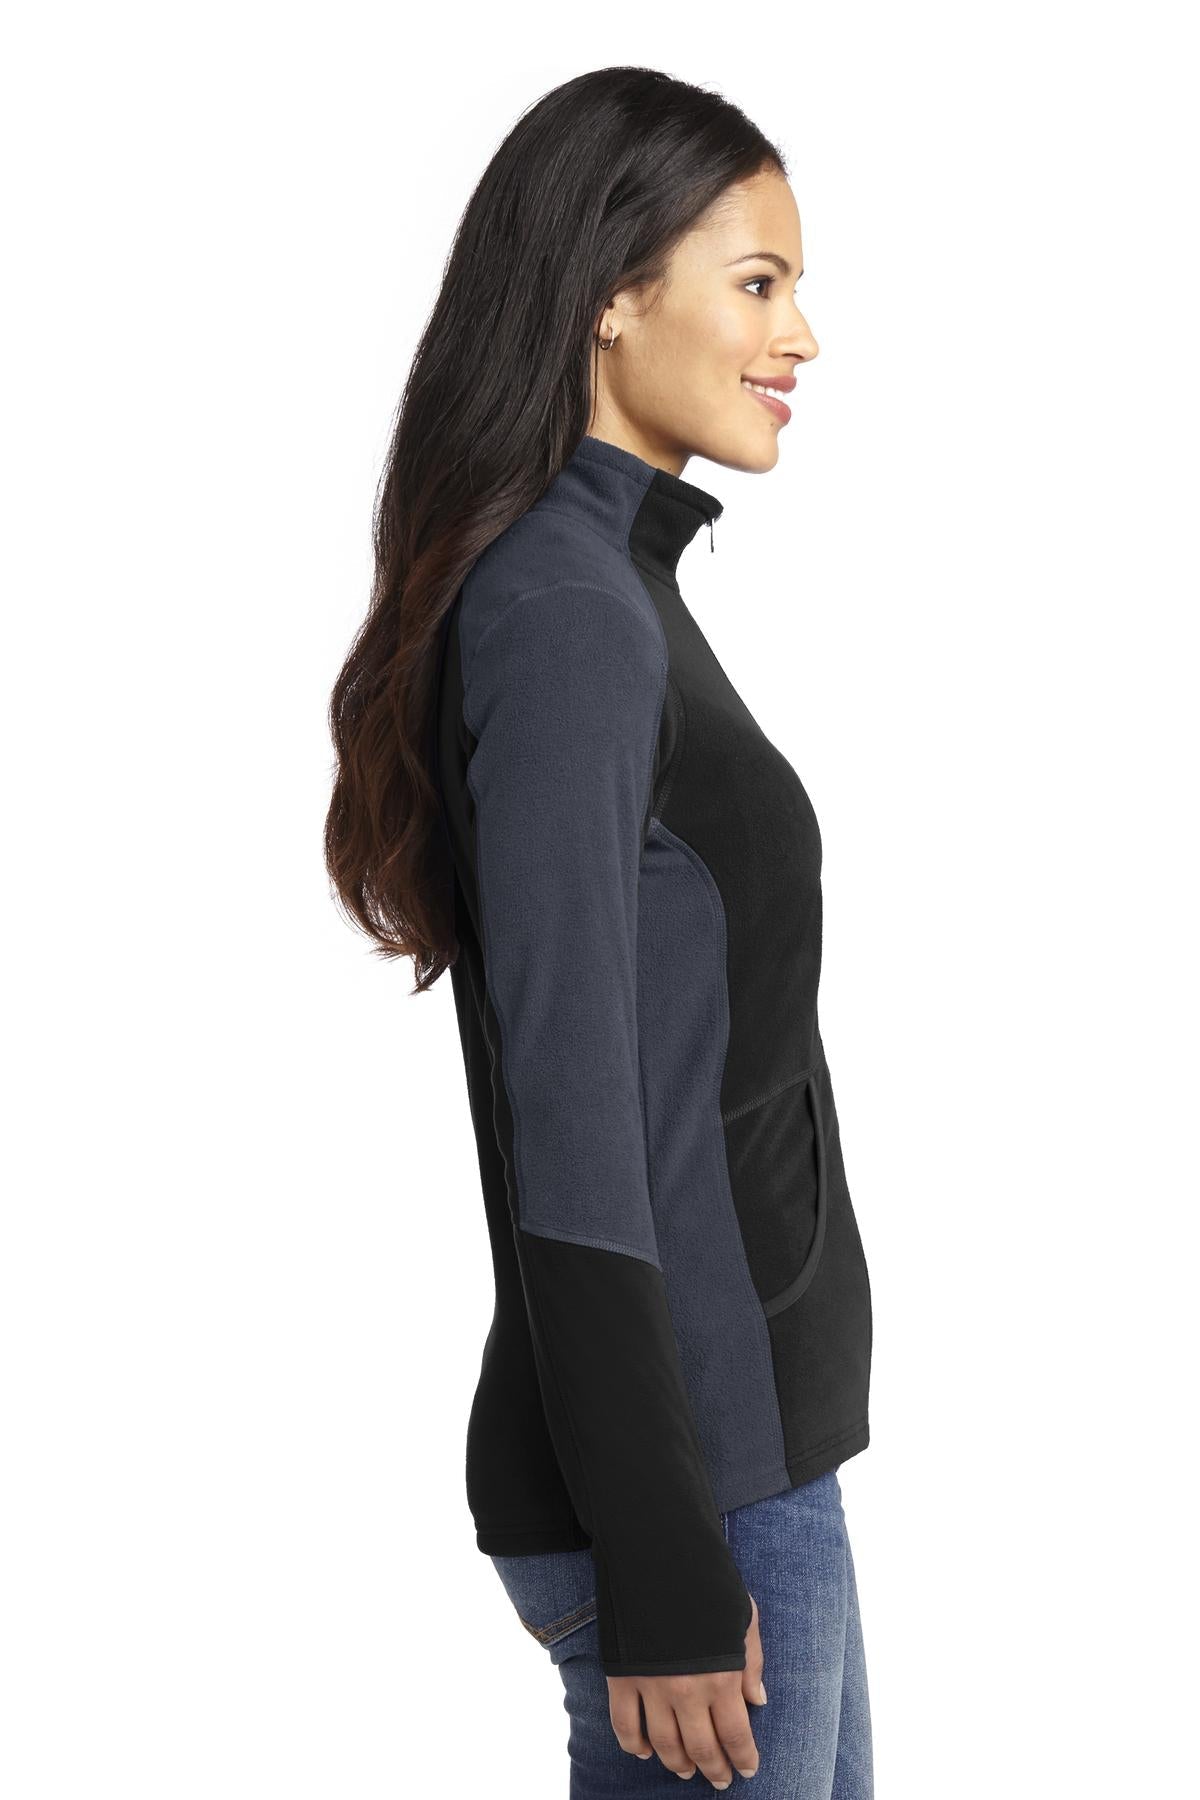 Port Authority® Ladies Colorblock Microfleece Jacket. L230 - DFW Impression